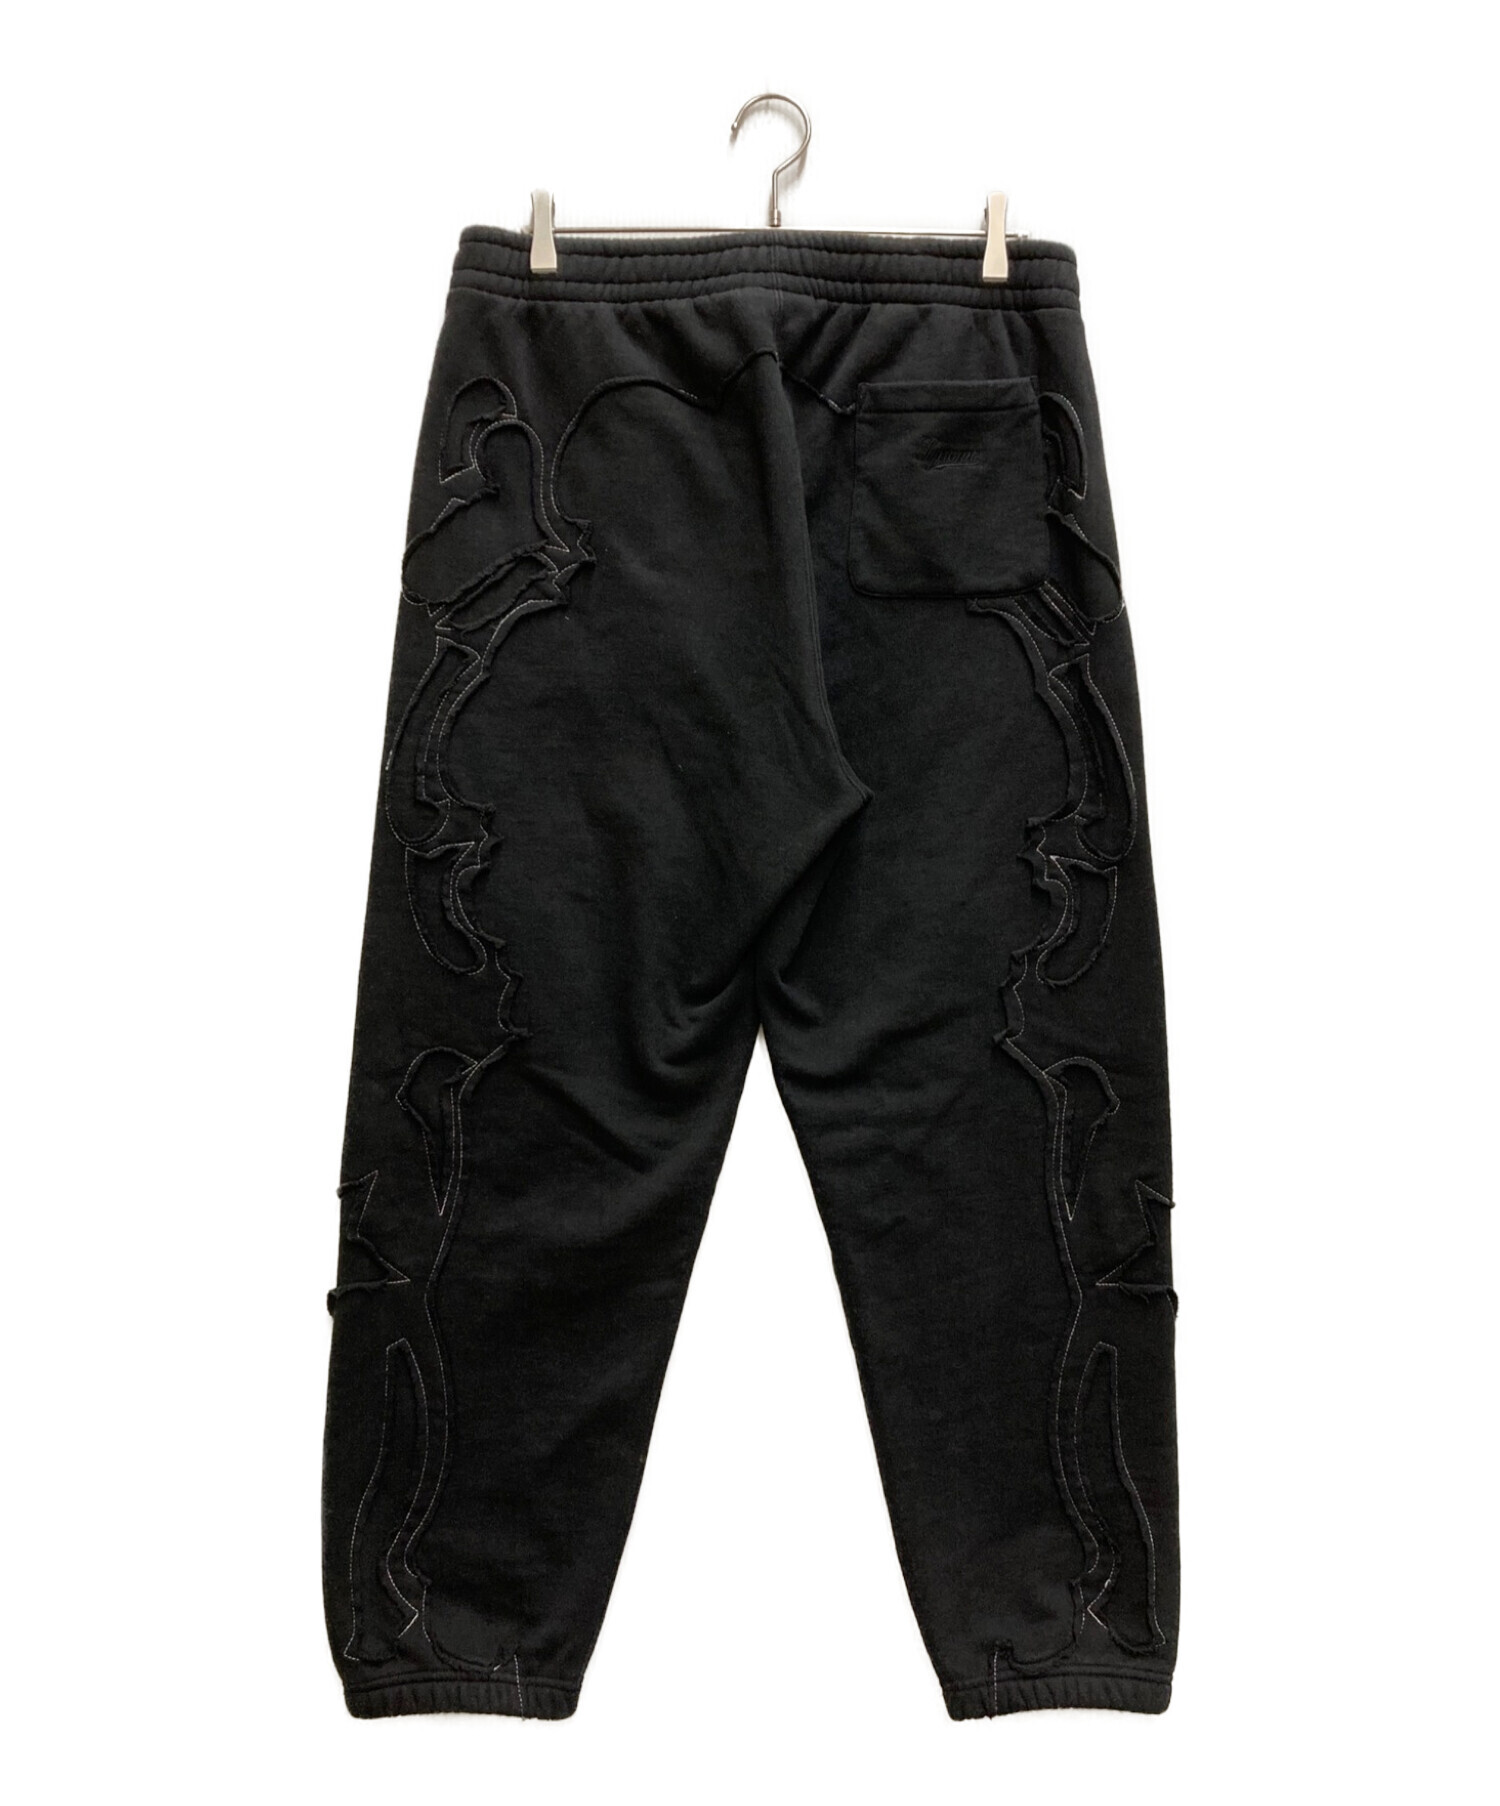 SUPREME (シュプリーム) Western Cut Out Sweatpant ブラック サイズ:Ⅿ